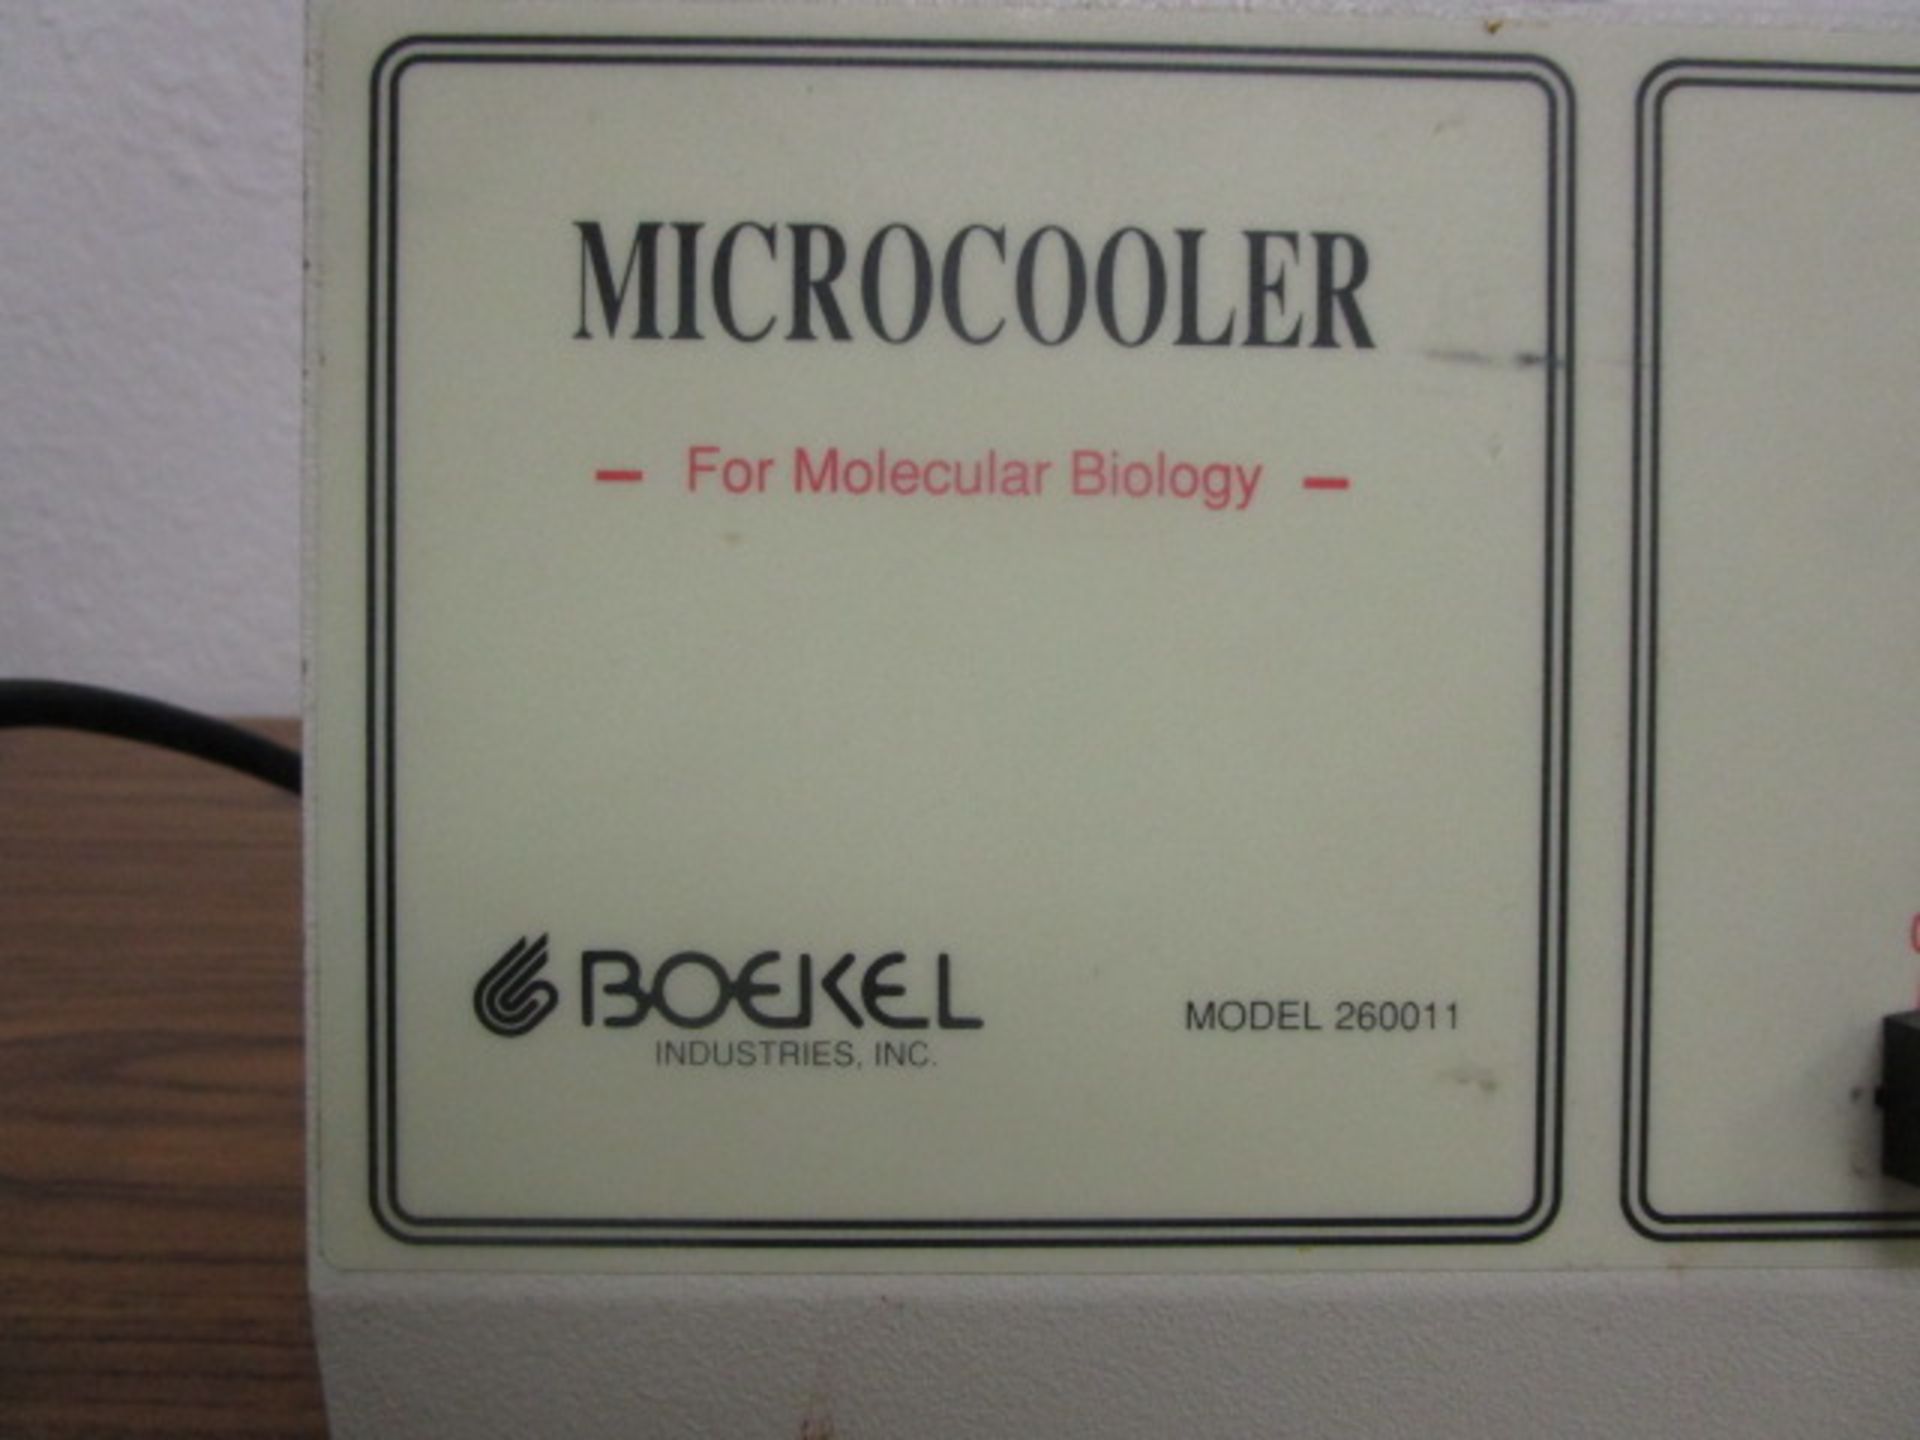 Boekel microcooler 260011 for molecular biology - Image 2 of 6